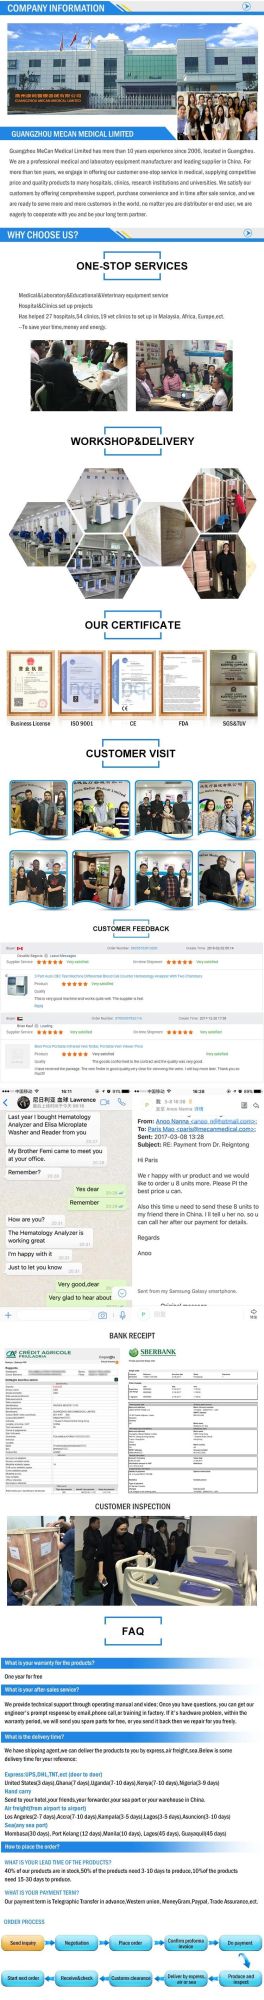 China Good Quality Affordable Optimum 30 Mini Bte Intelligent Hearing Aid Ce&FDA